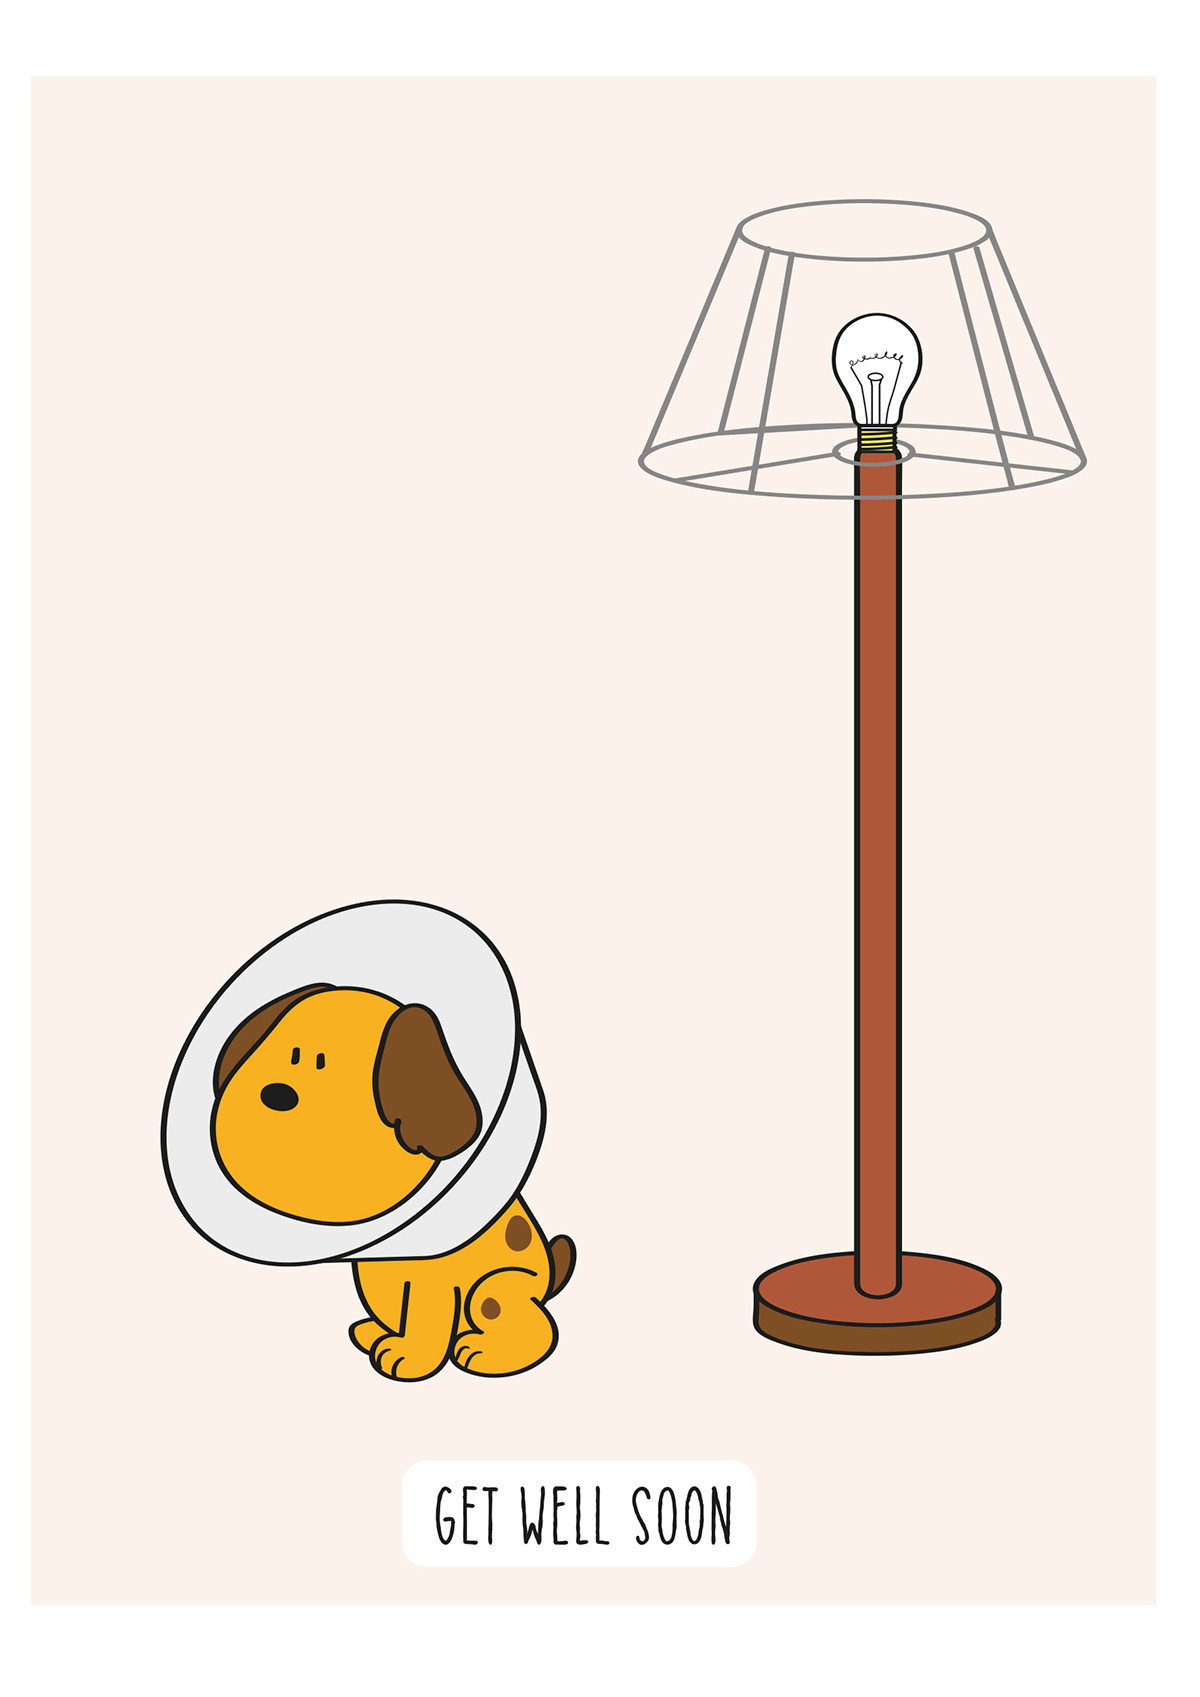 getwellsoon greetings puppy dog humour cartoon Lamp